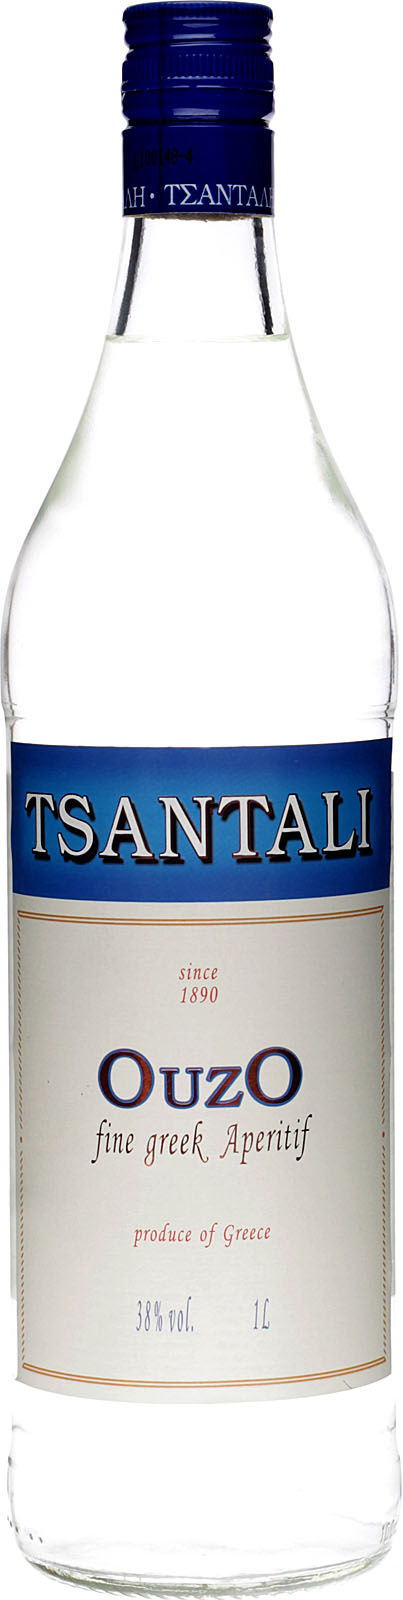 Tsantali Ouzo 1 Liter 38